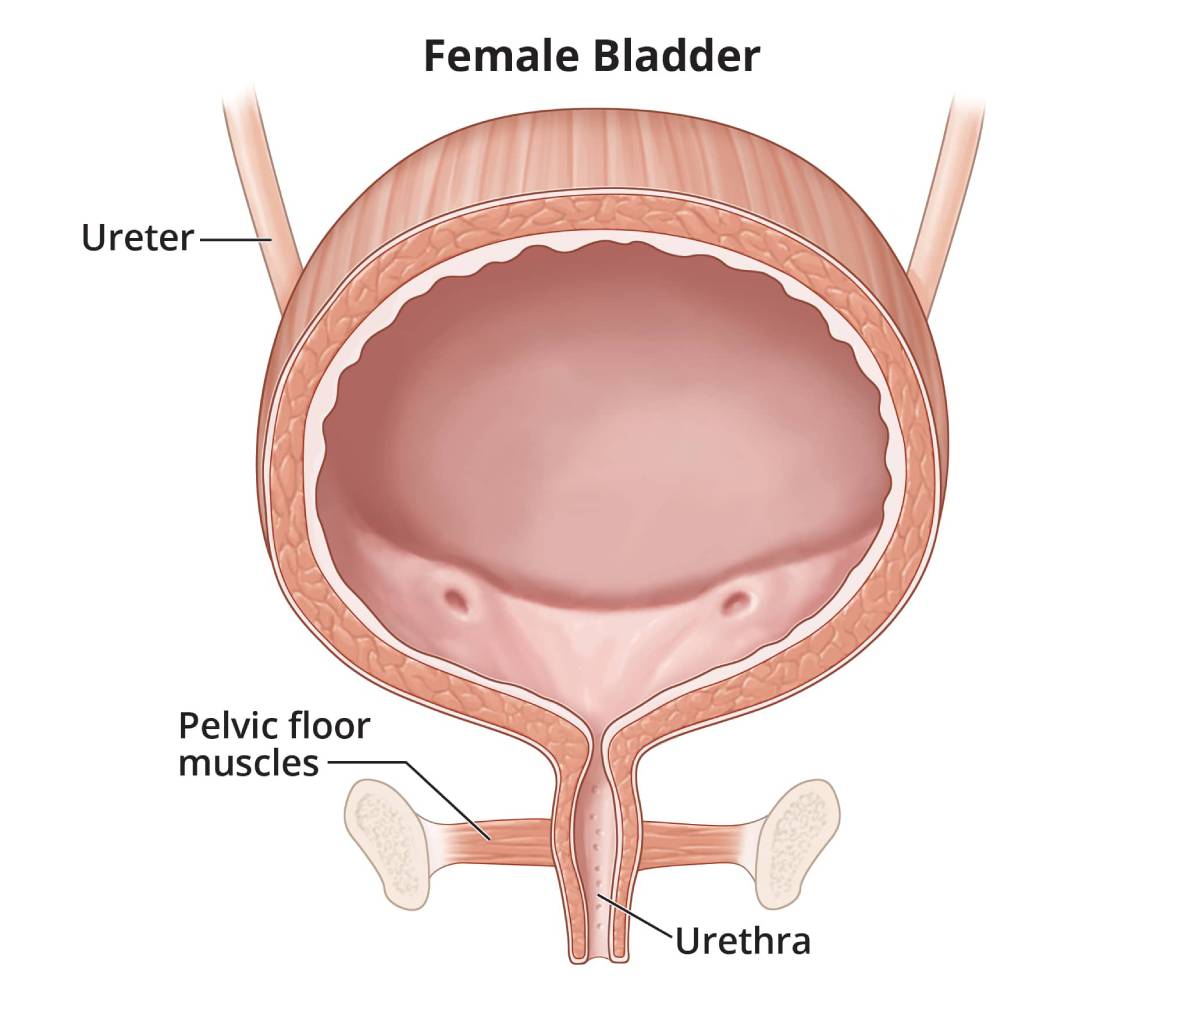 Close-up illustration of a female bladder, ureters, pelvic floor muscles, and urethra.